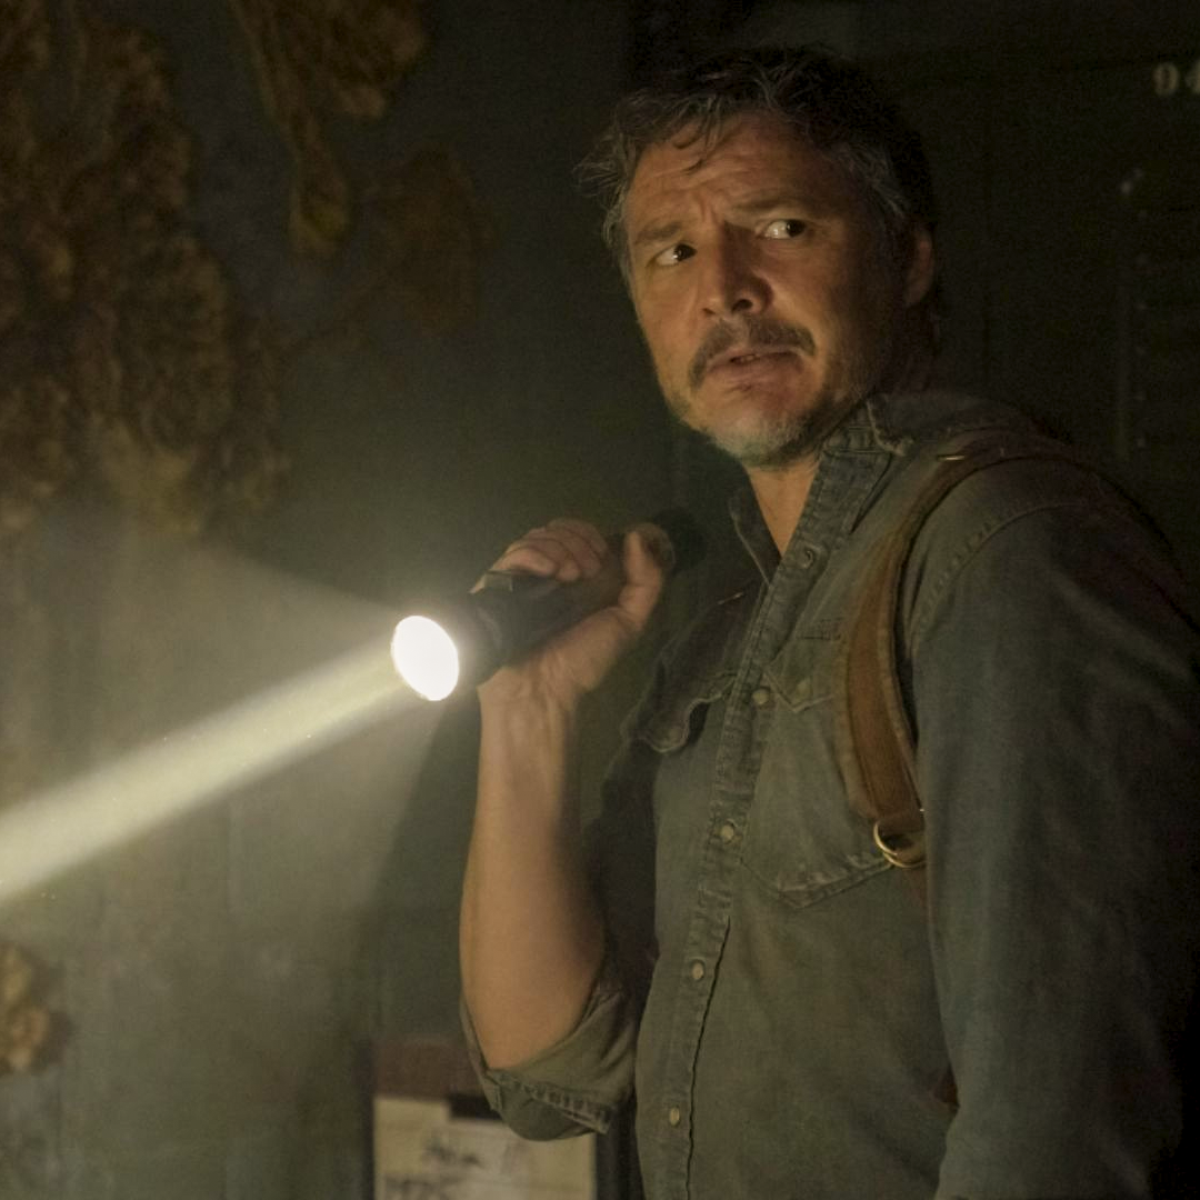 The Last of Us: Trailer do episódio 5 explora novo grupo